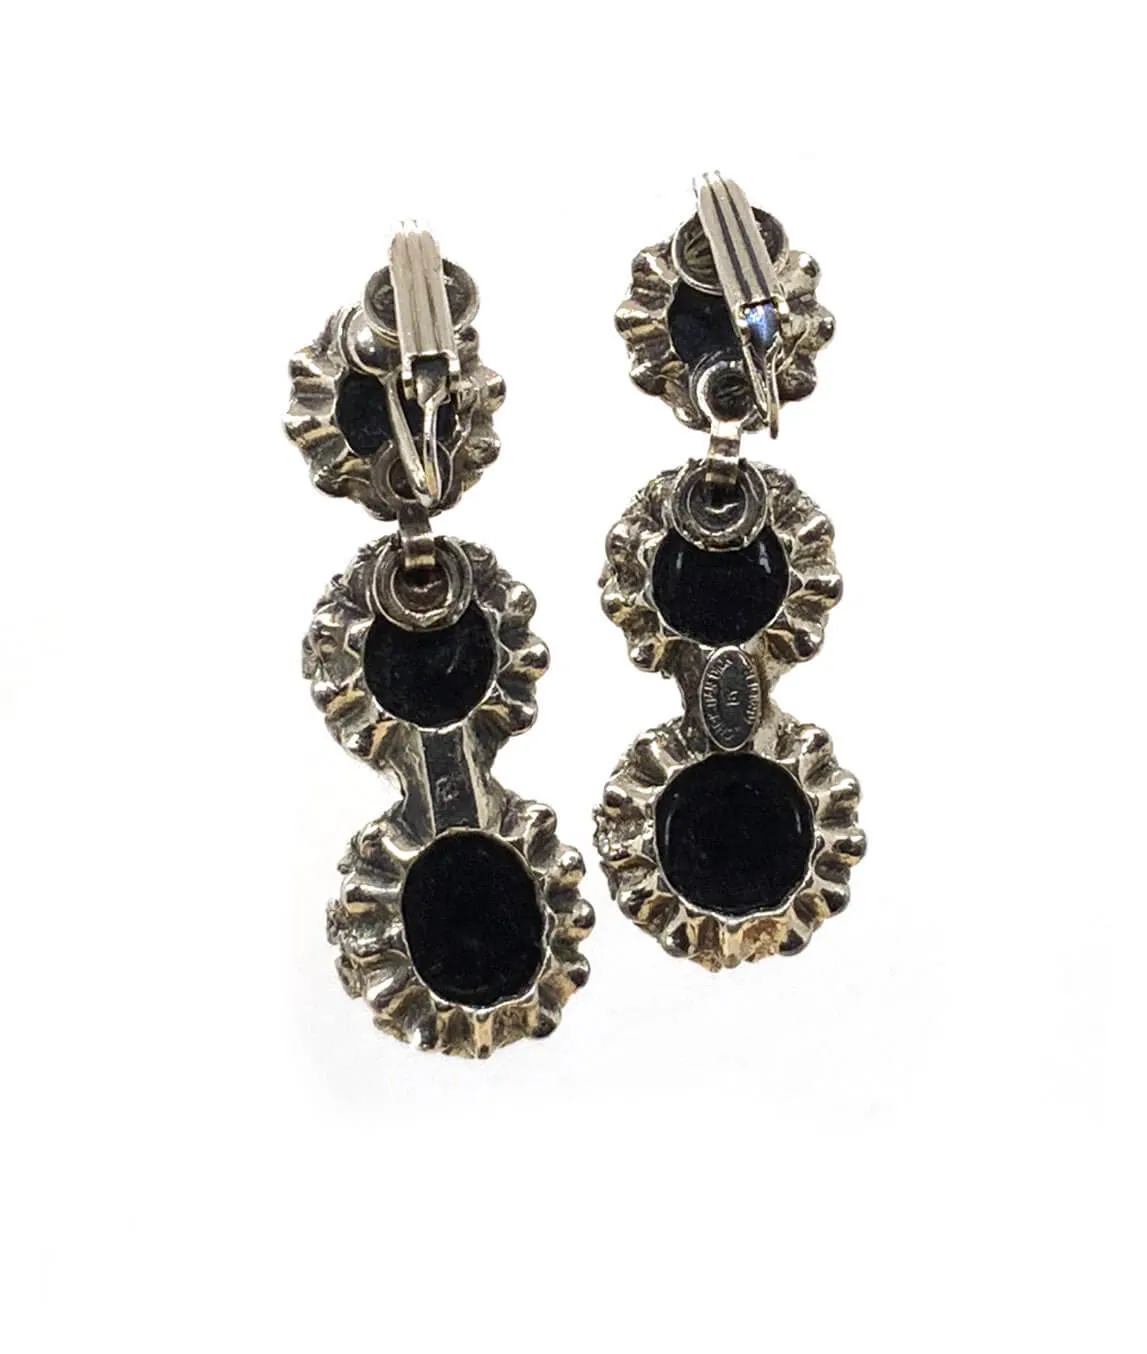 Vintage black glass earrings by Dior